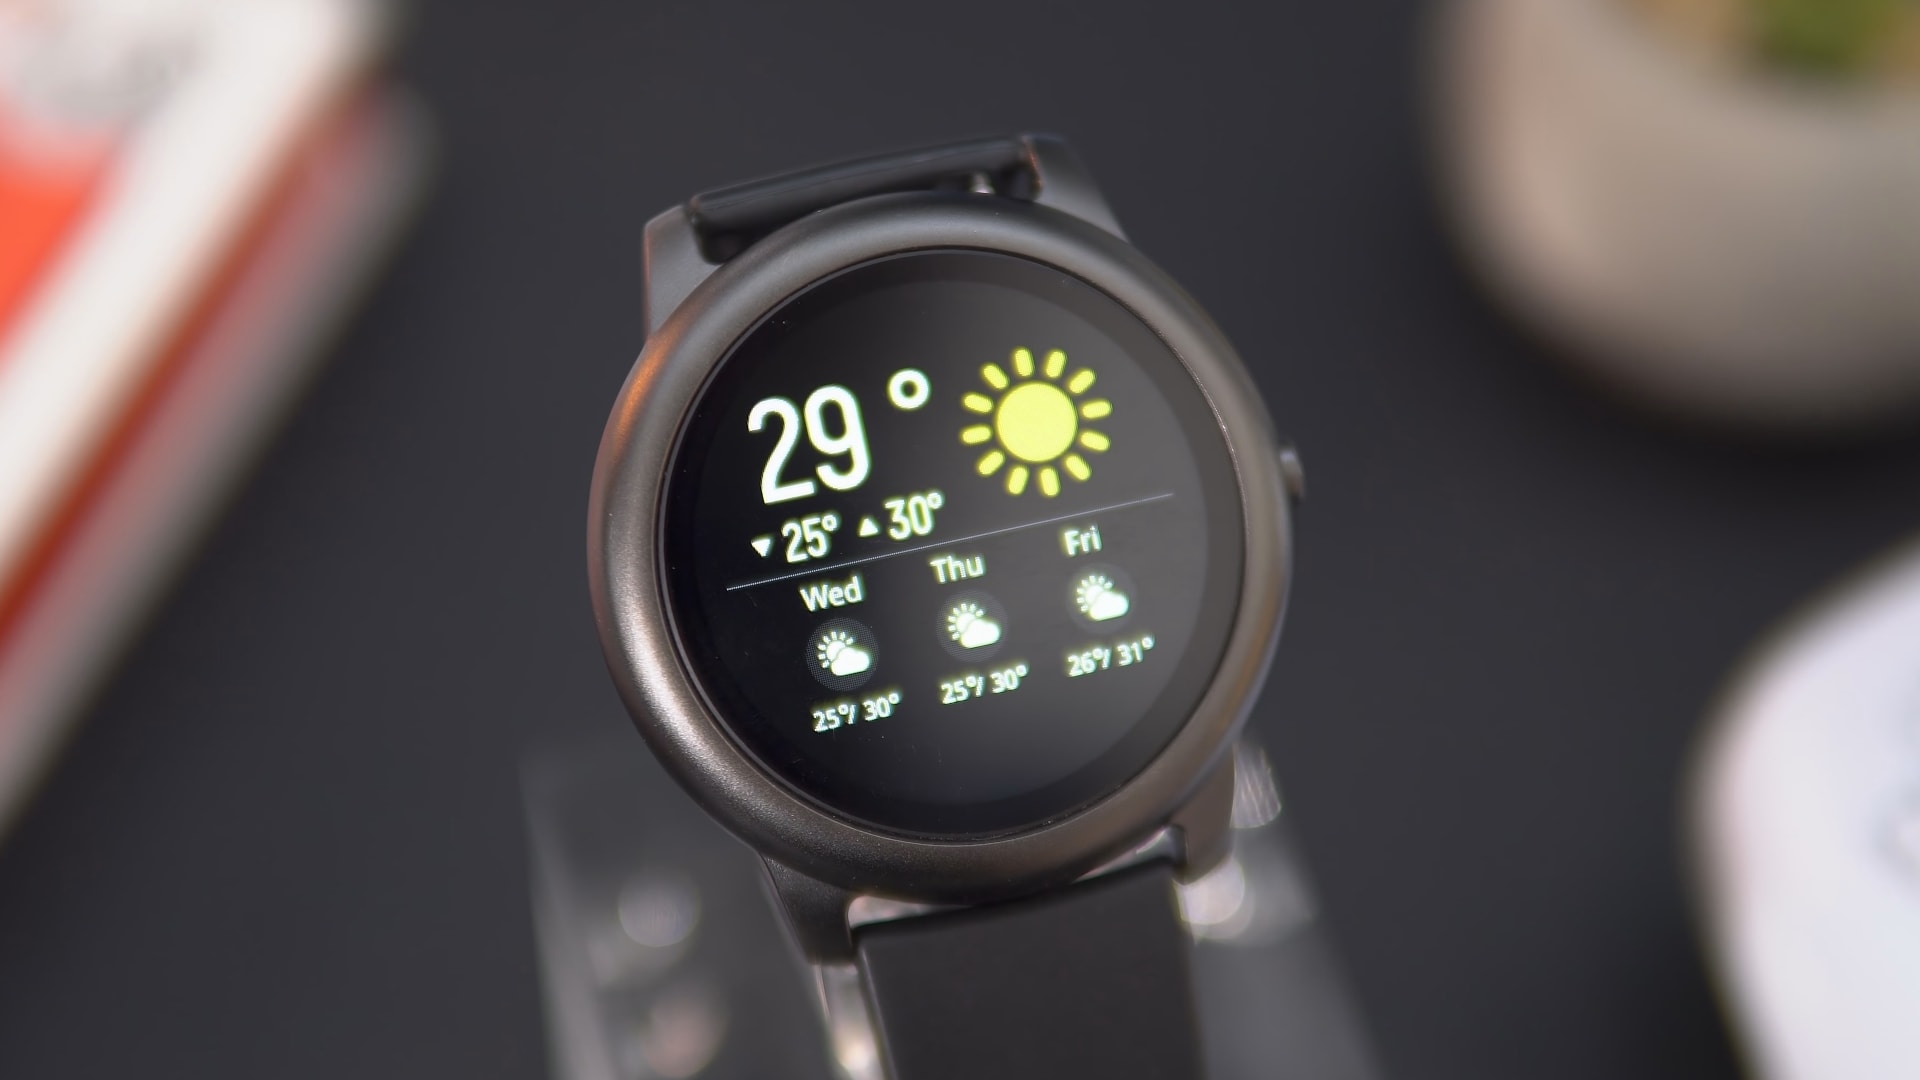 Relógio SmartWatch Haylou Solar LS05 Original - Versão Global